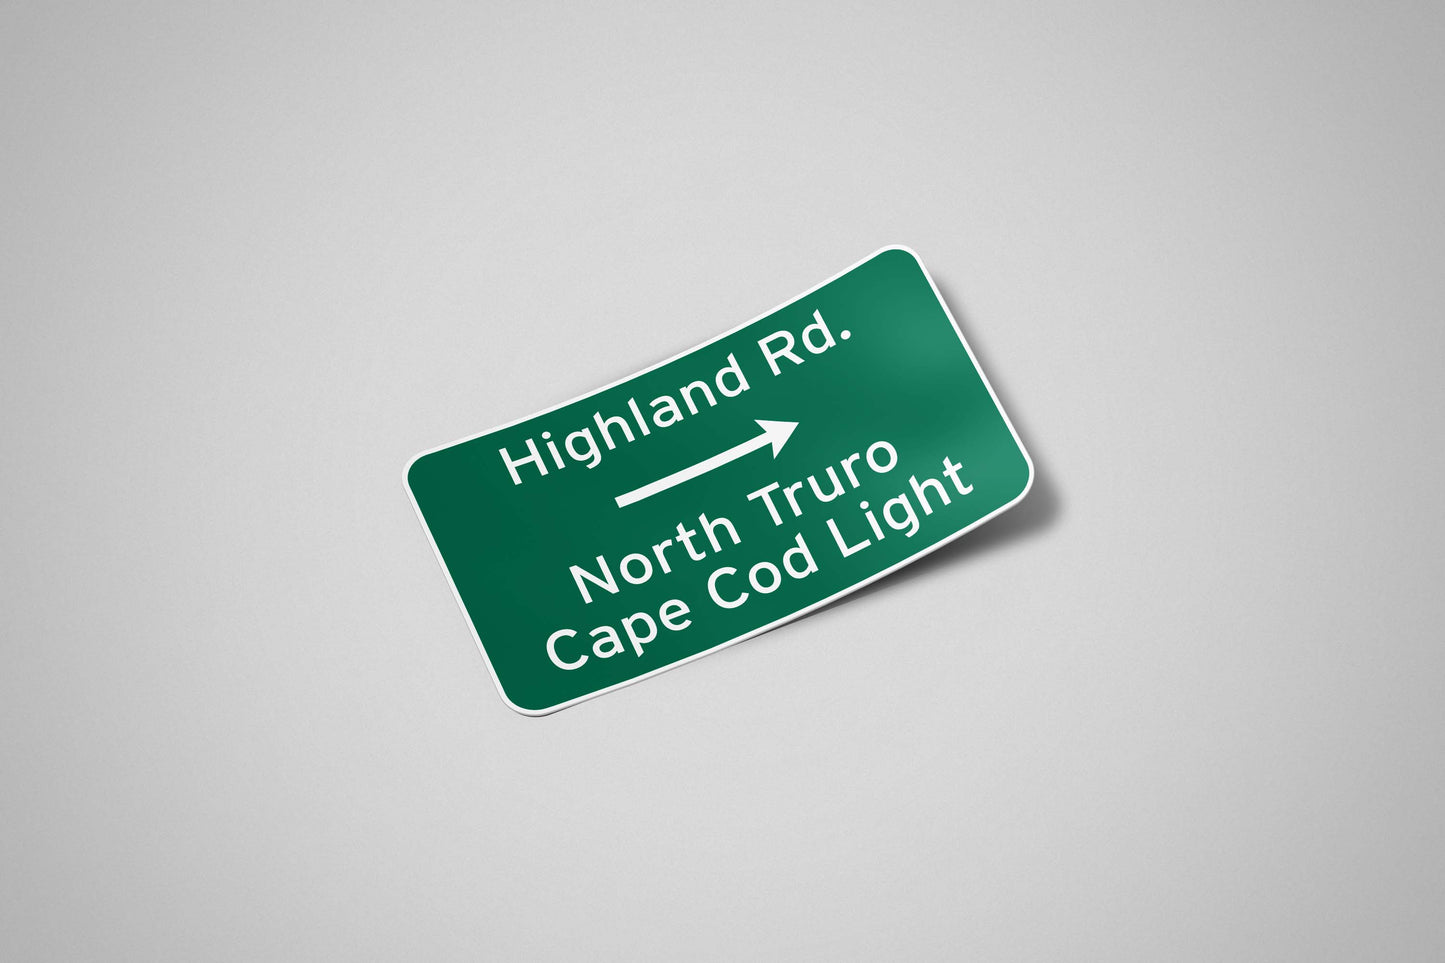 Highland Road Cape Cod Light North Truro Vinyl Sticker